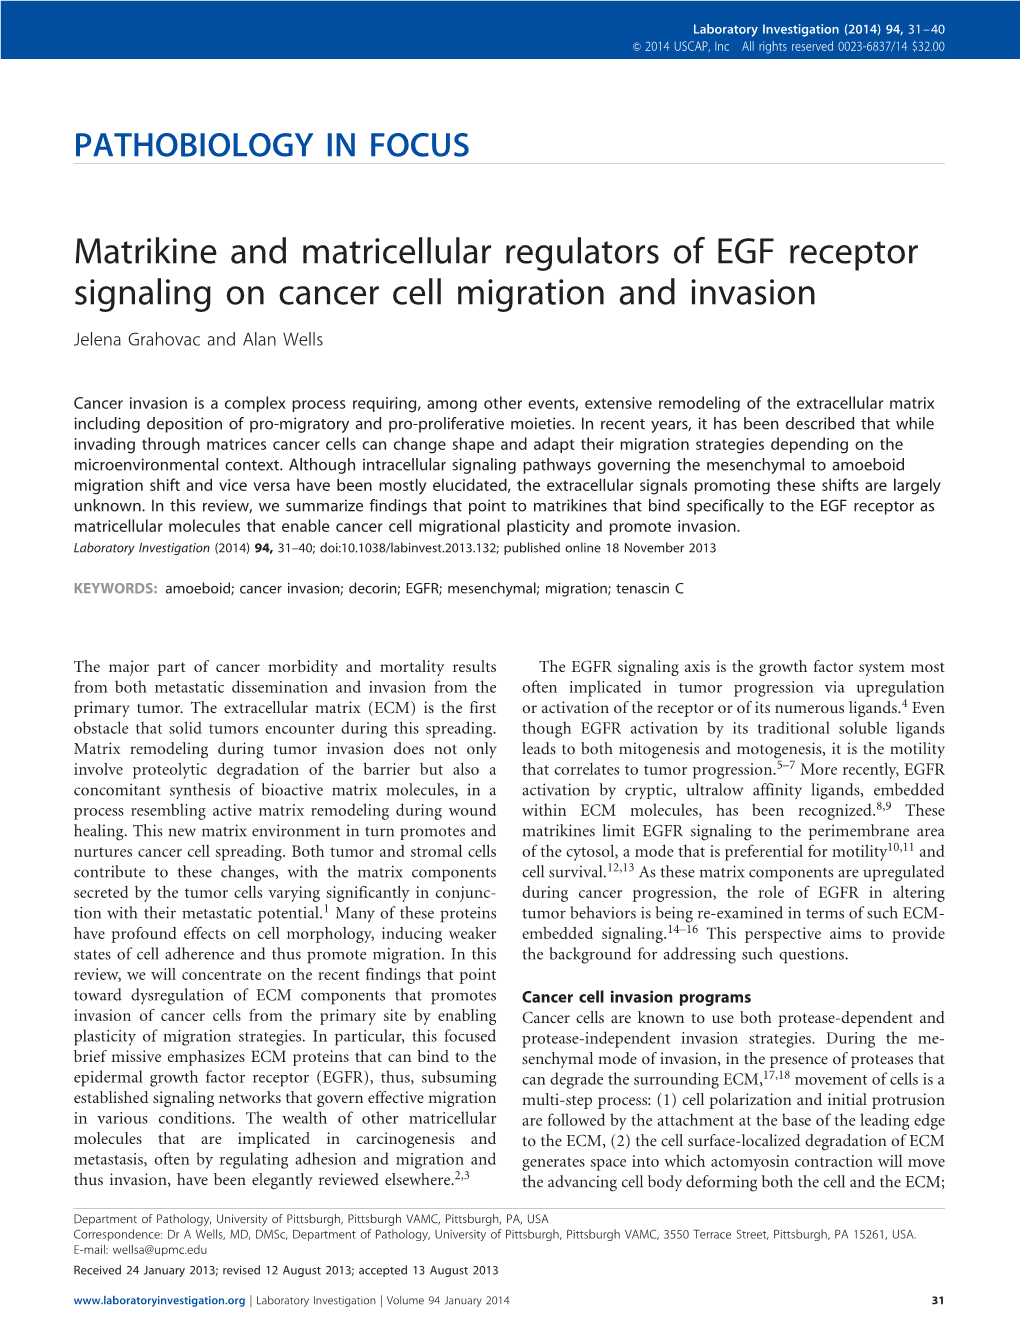 Matrikine and Matricellular Regulators of EGF Receptor Signaling on Cancer Cell Migration and Invasion Jelena Grahovac and Alan Wells